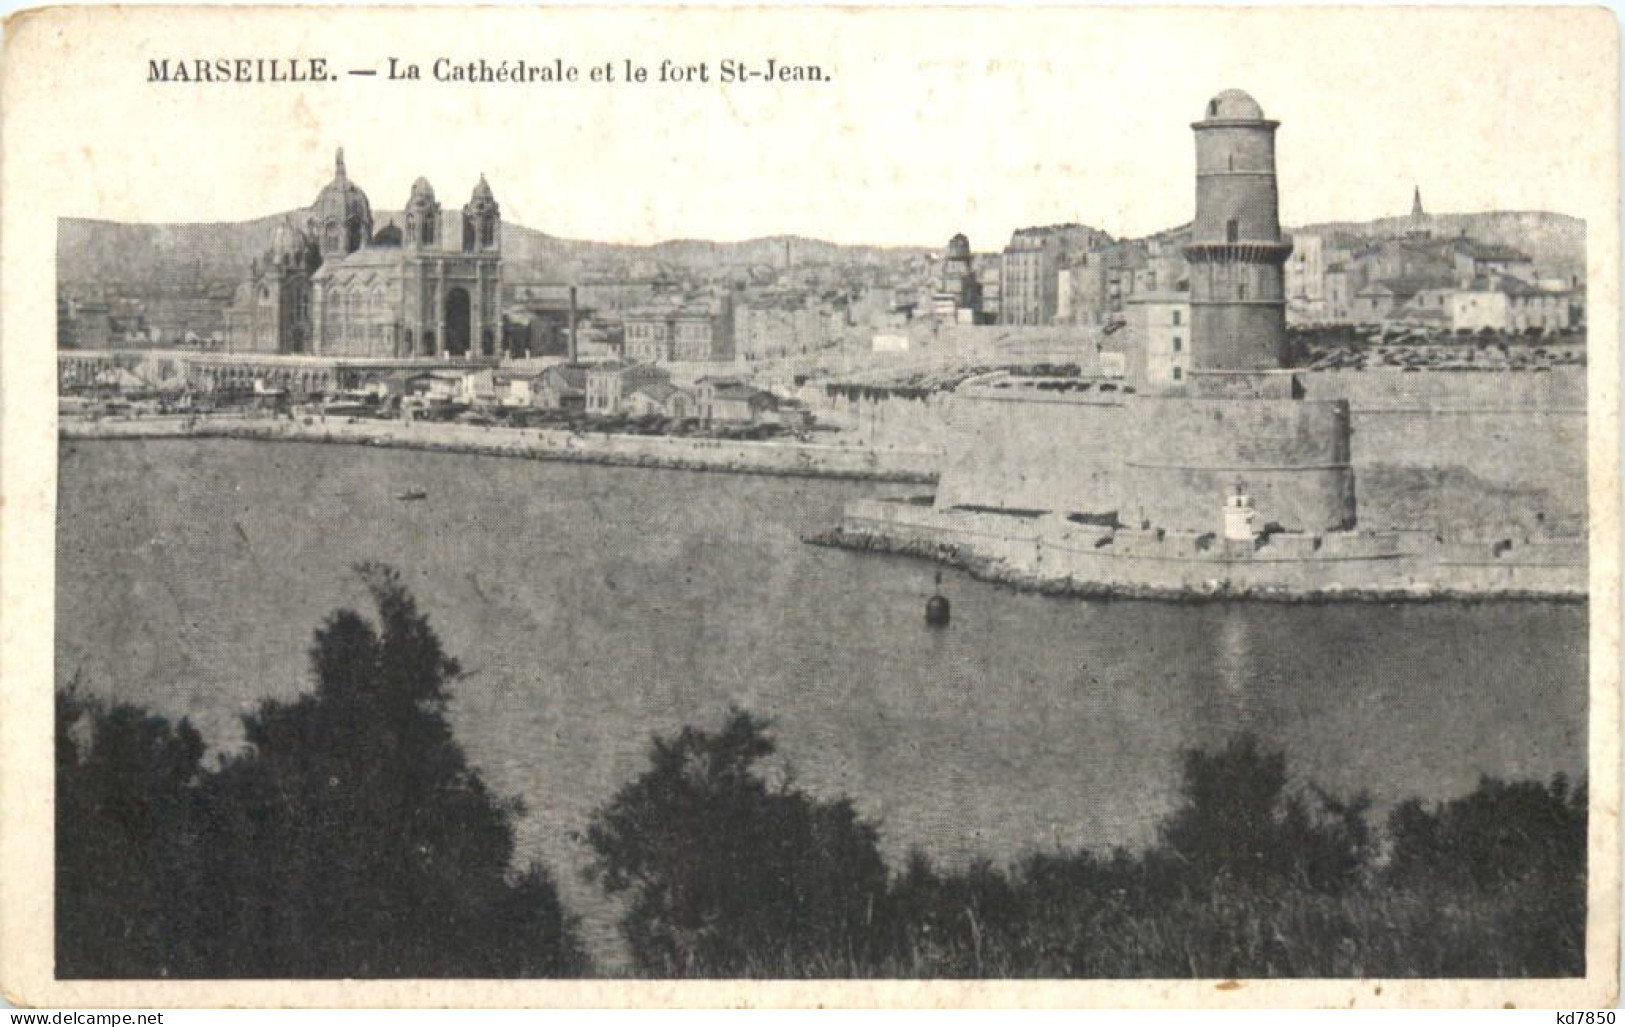 Marseille - Mini Postcard - Unclassified